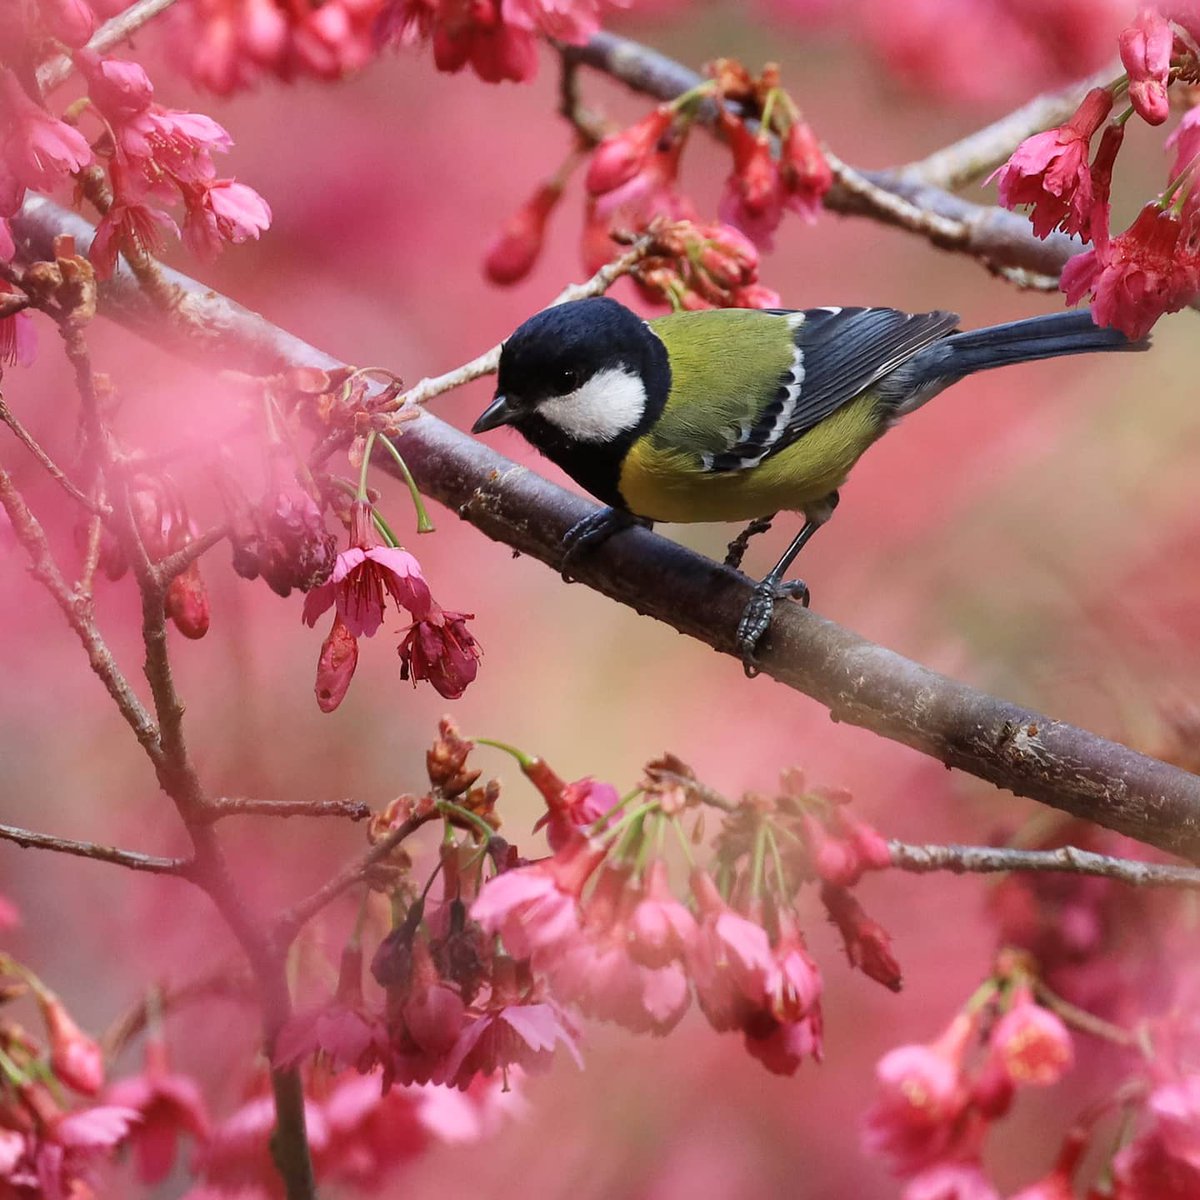 #GreenBackedTit with #cherryblossom

#TaiwanEndemicSubspecies 
photo by Allen Lyu
#TaiwanBirdGuide #bird #birding #birdtour #Taiwan